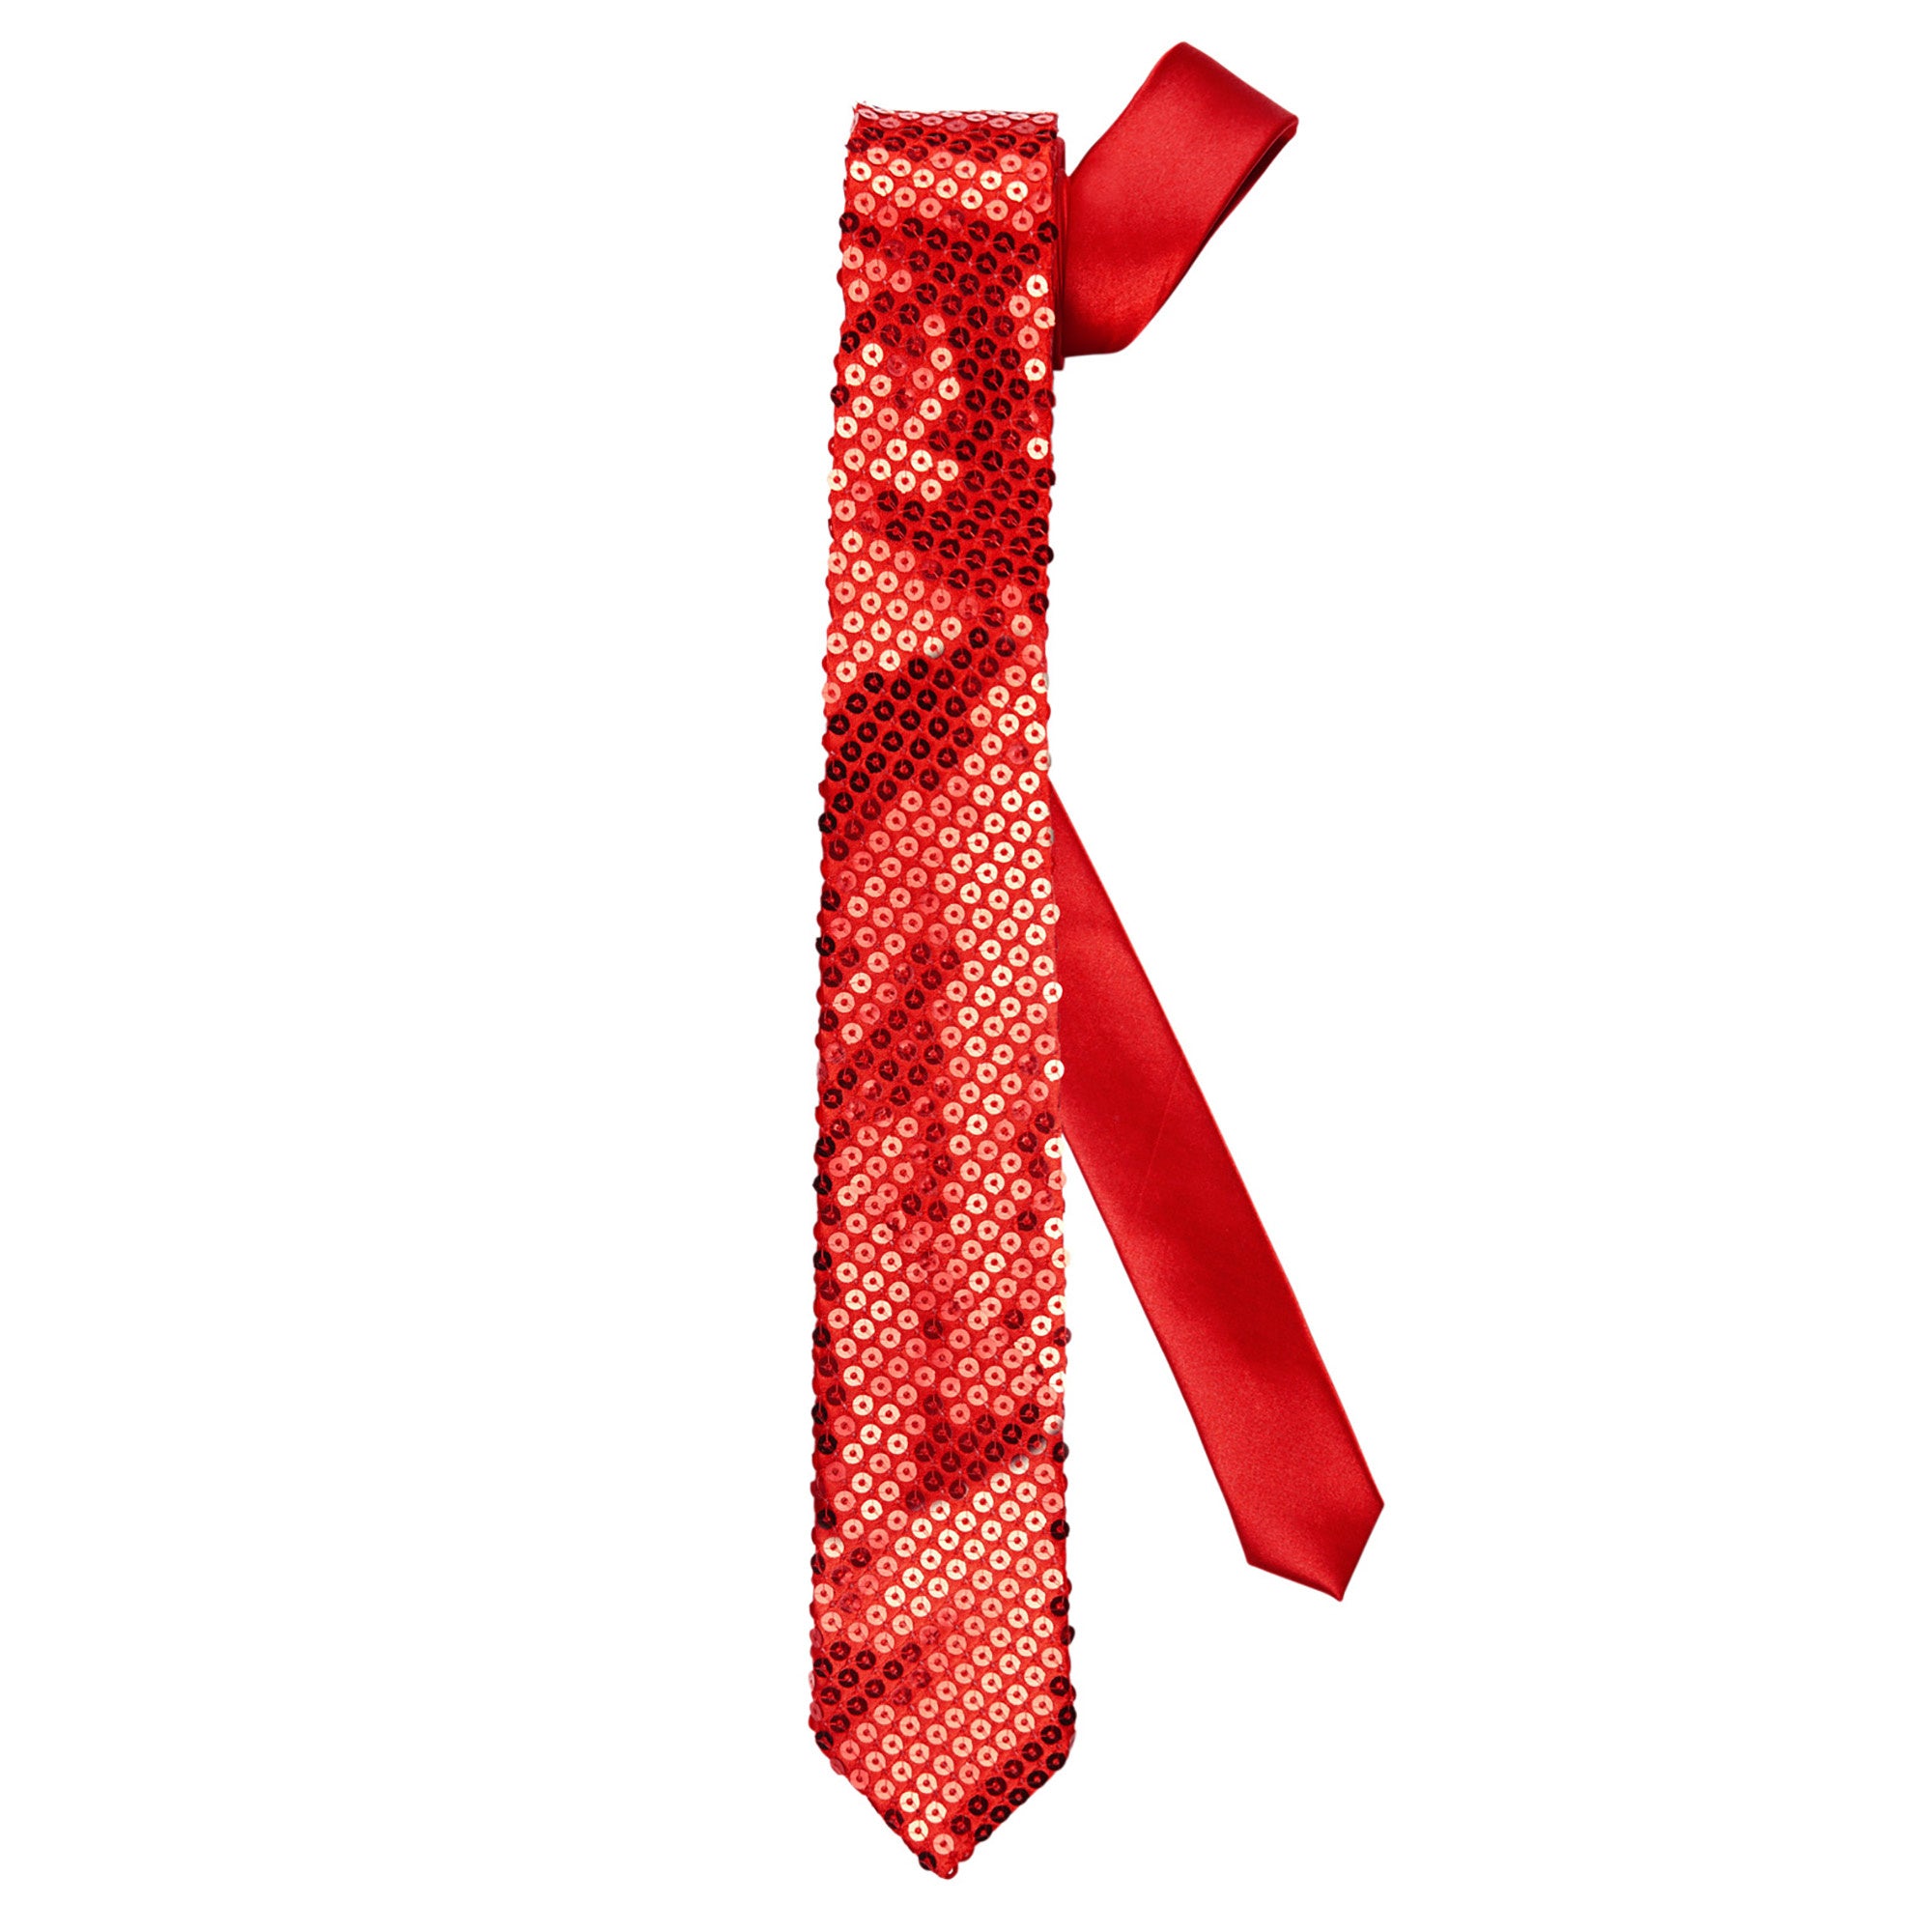 Feestaccessoires: Glitter stropdas in rood